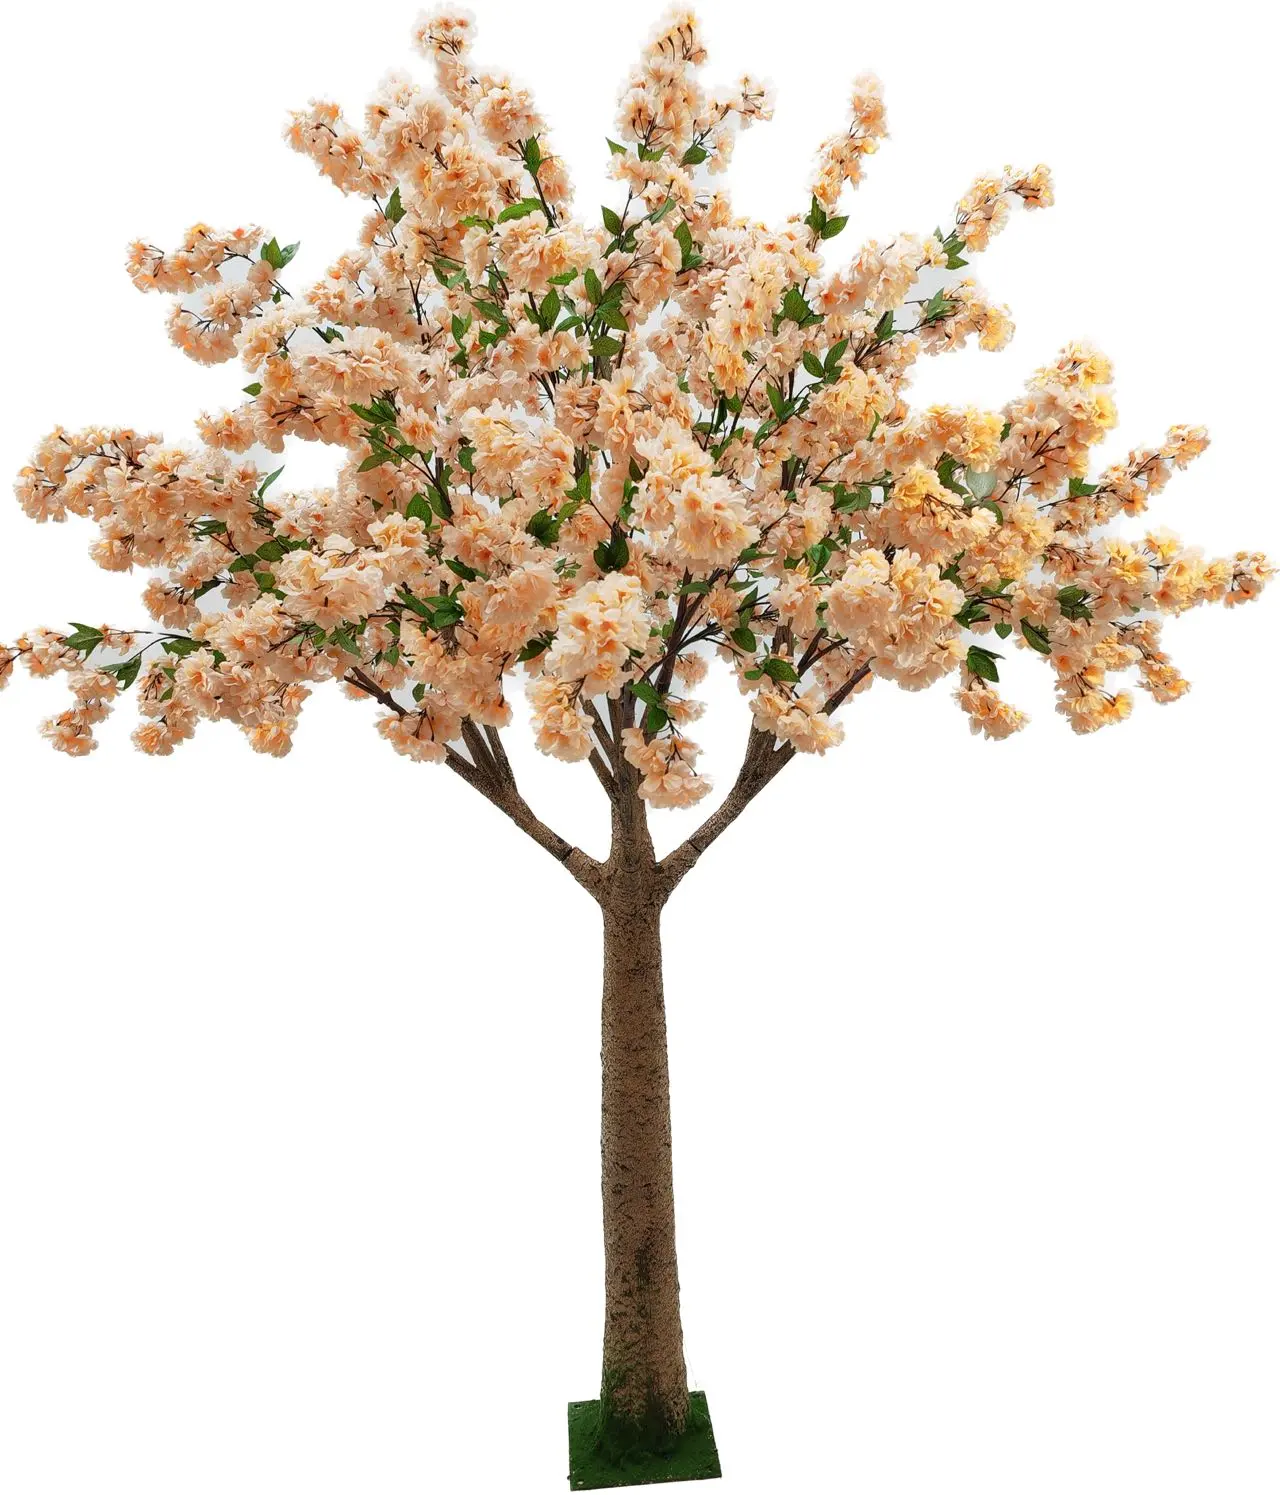 Wholesale Artificial Cherry Wedding Flower Sakura Flower Cherry Blossom Tree For Wedding Centerpieces Decorations